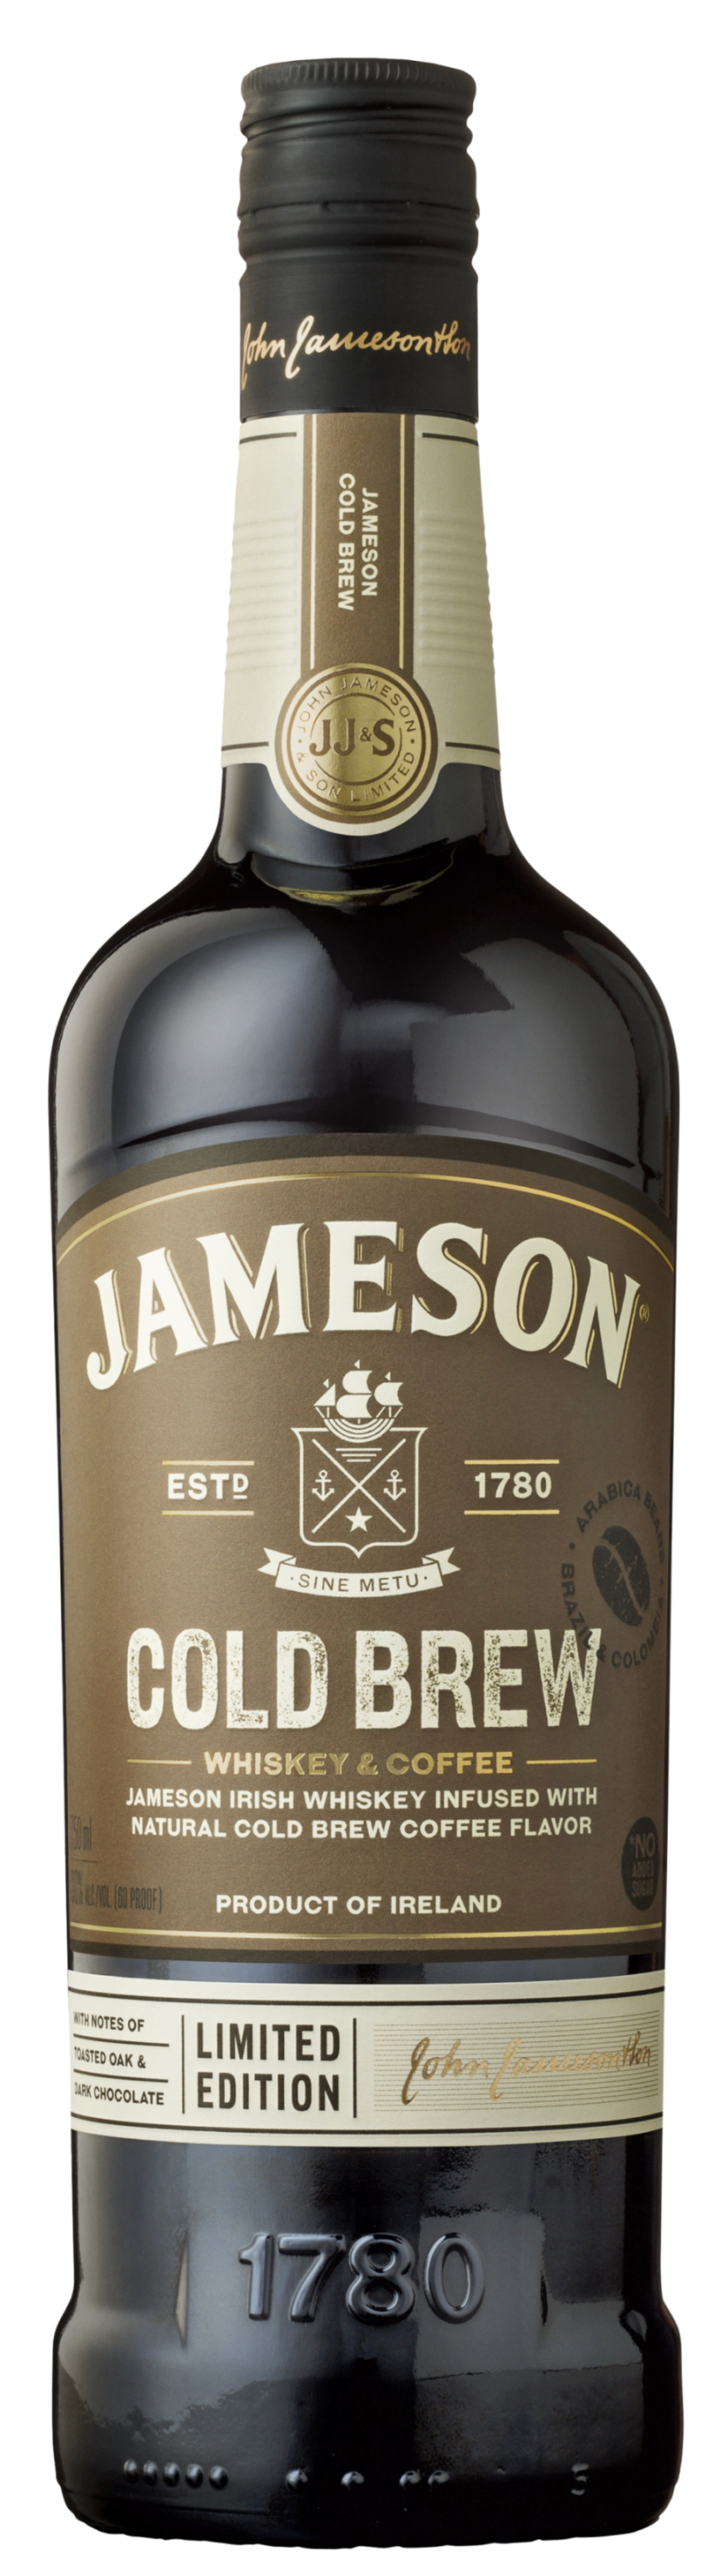 https://www.bottlesandcases.com/images/sites/bottlesandcases/labels/jameson-cold-brew-coffee-infused-irish-whiskey_1.jpg